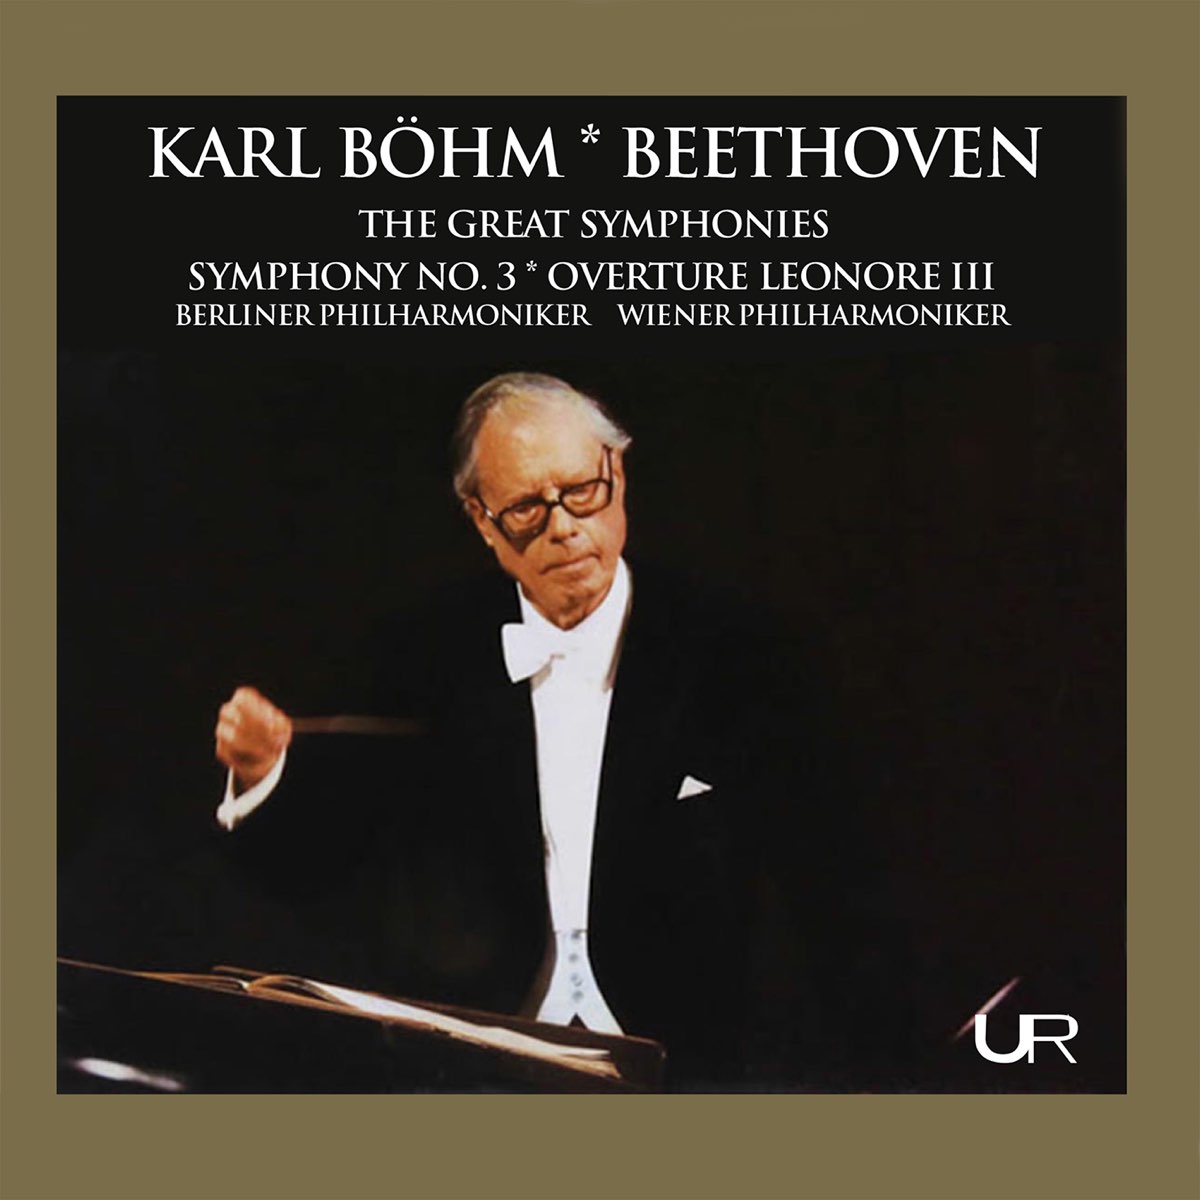 ‎Böhm Conducts Beethoven, Vol. 1 by Karl Böhm & Berlin Philharmonic on ...